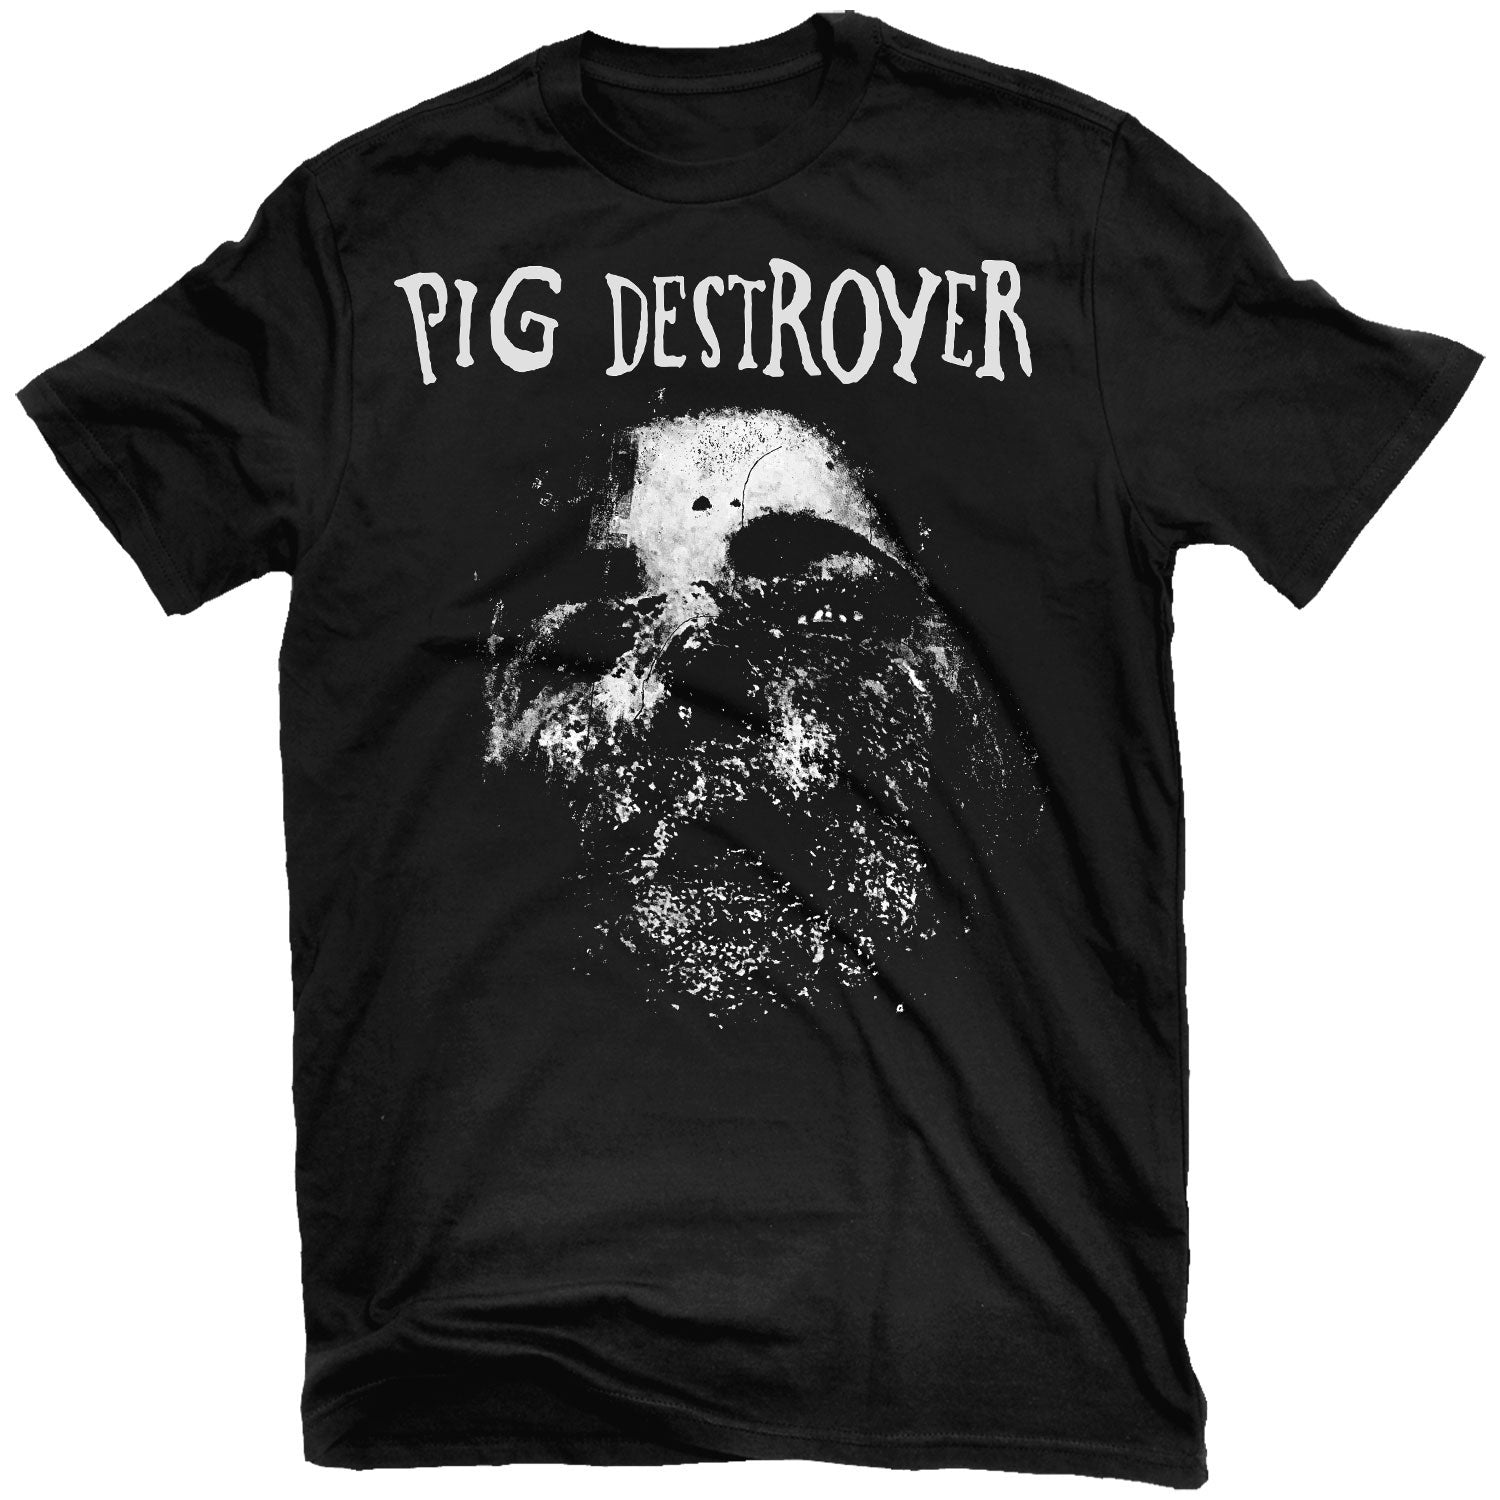 Pig Destroyer "Pornographers of Sound" T-Shirt